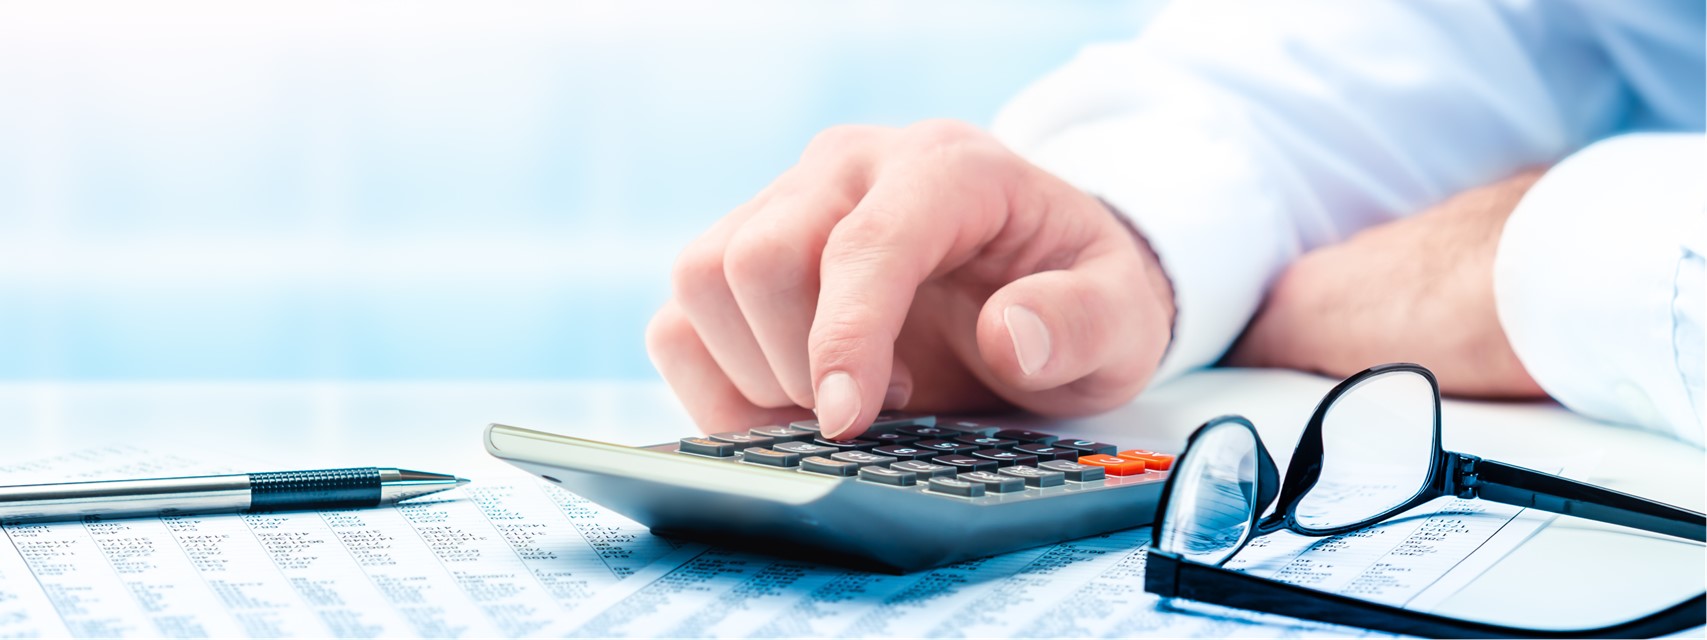 Businessman calculating effect of financial restatement on compensation